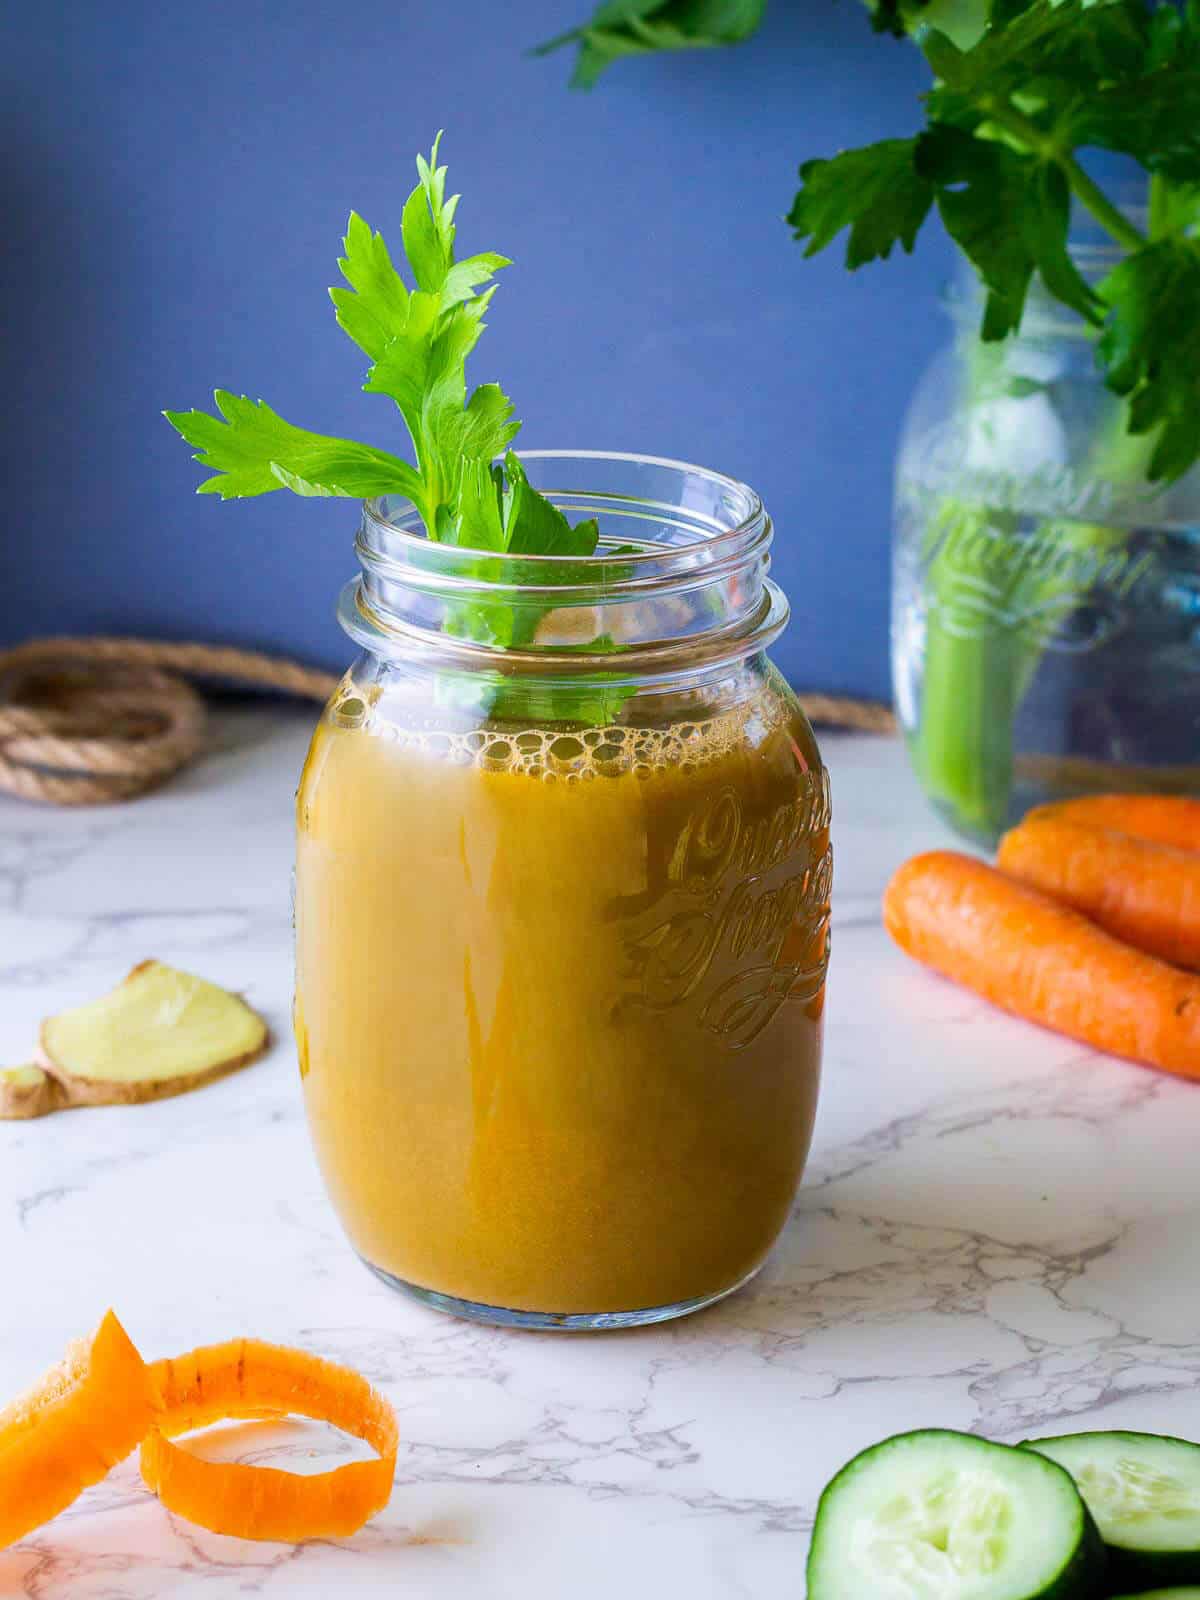 62 kcal Carrot Cucumber And Celery Juice